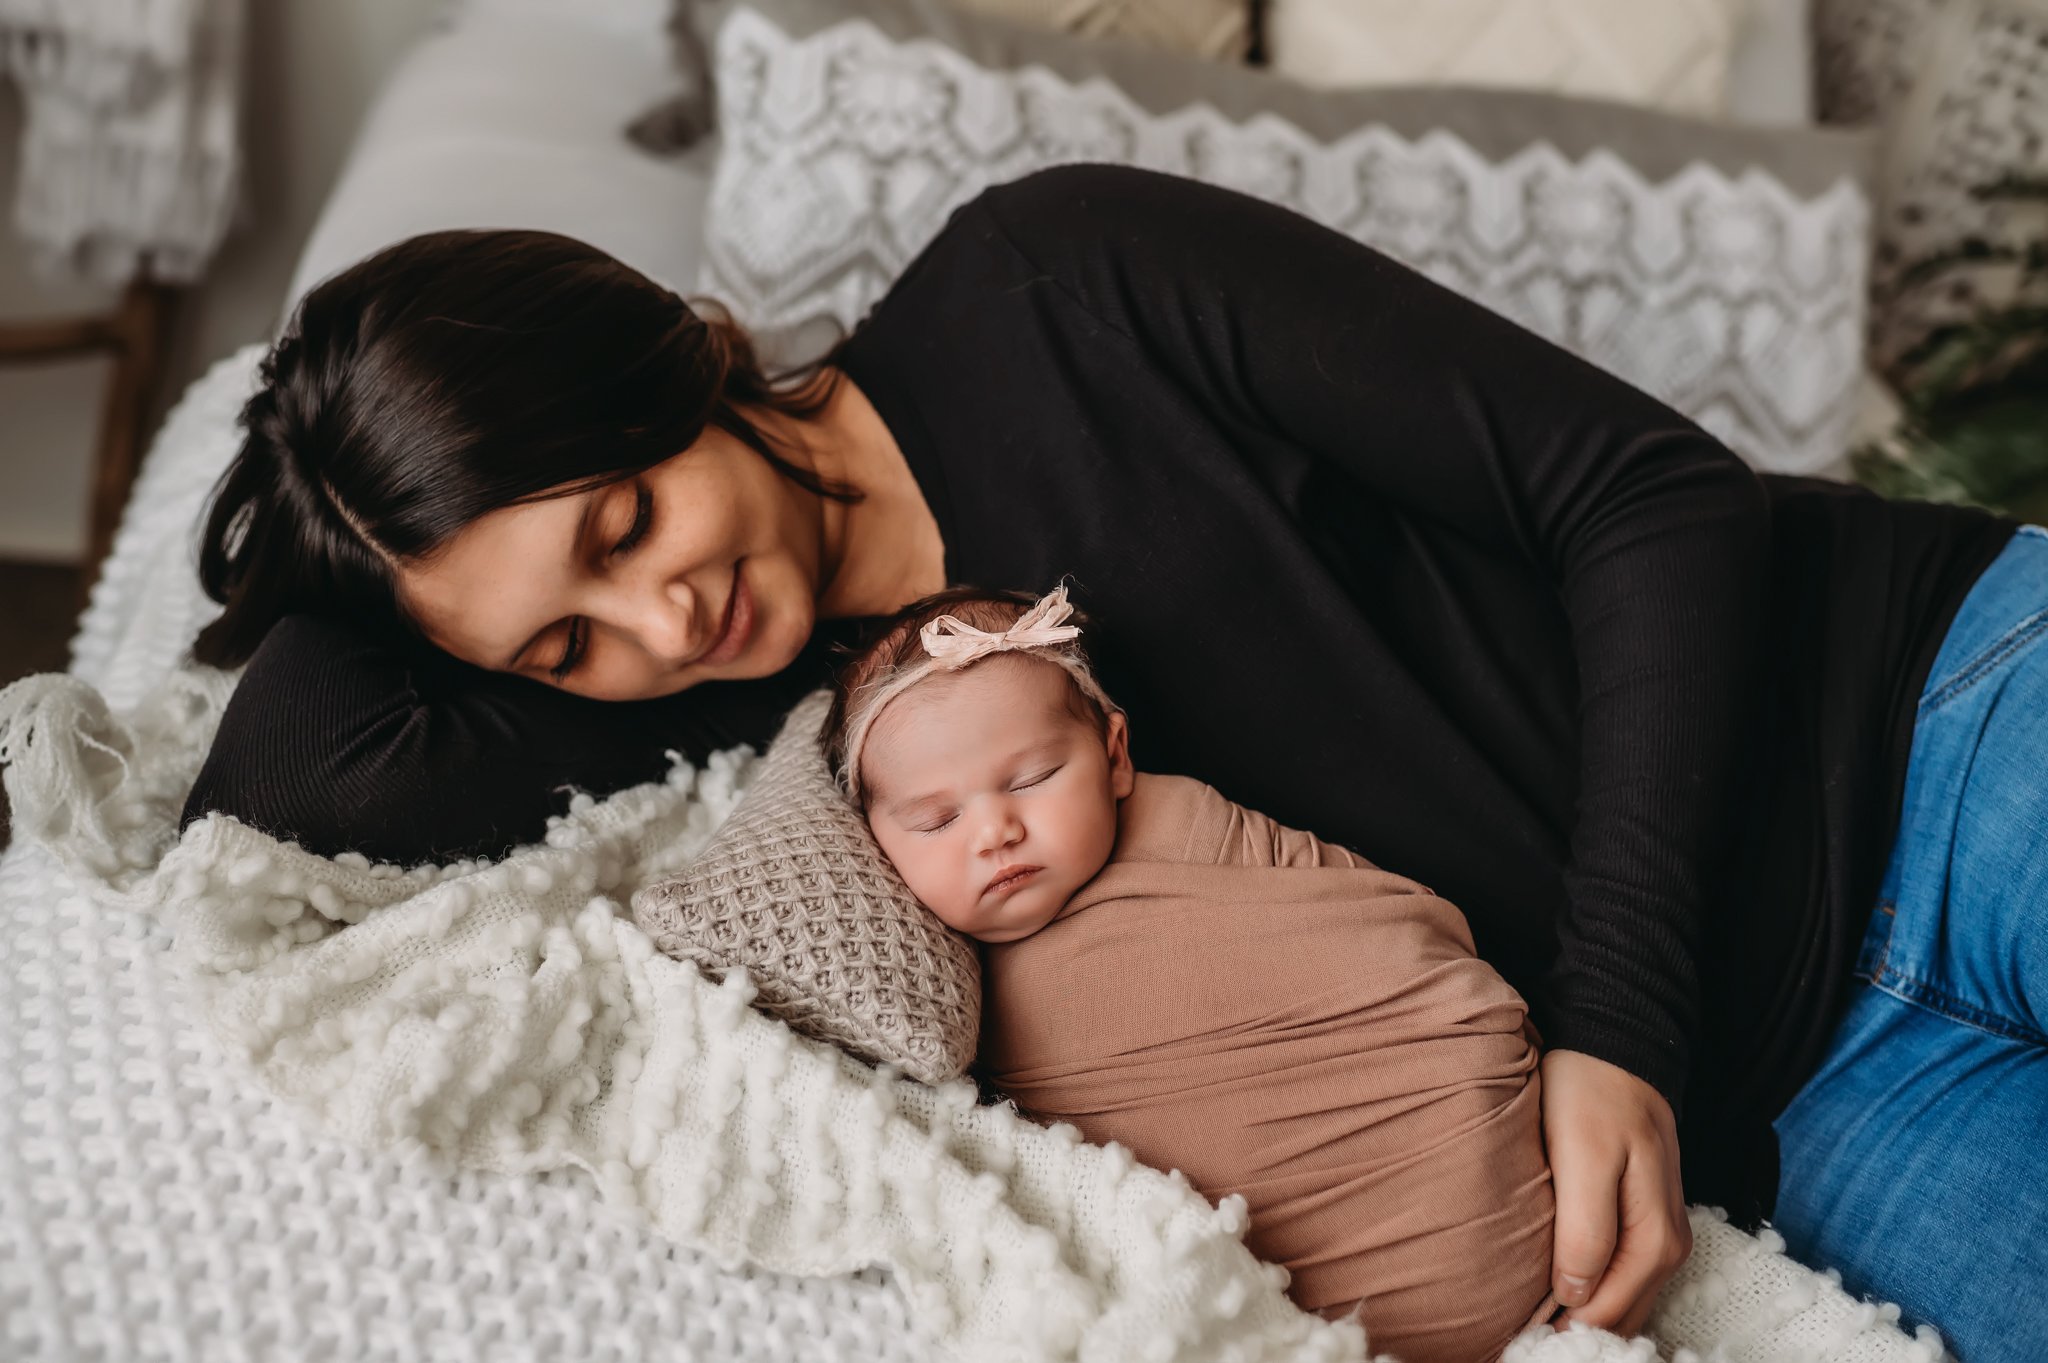 Central illinois newborn and mom photo.jpg